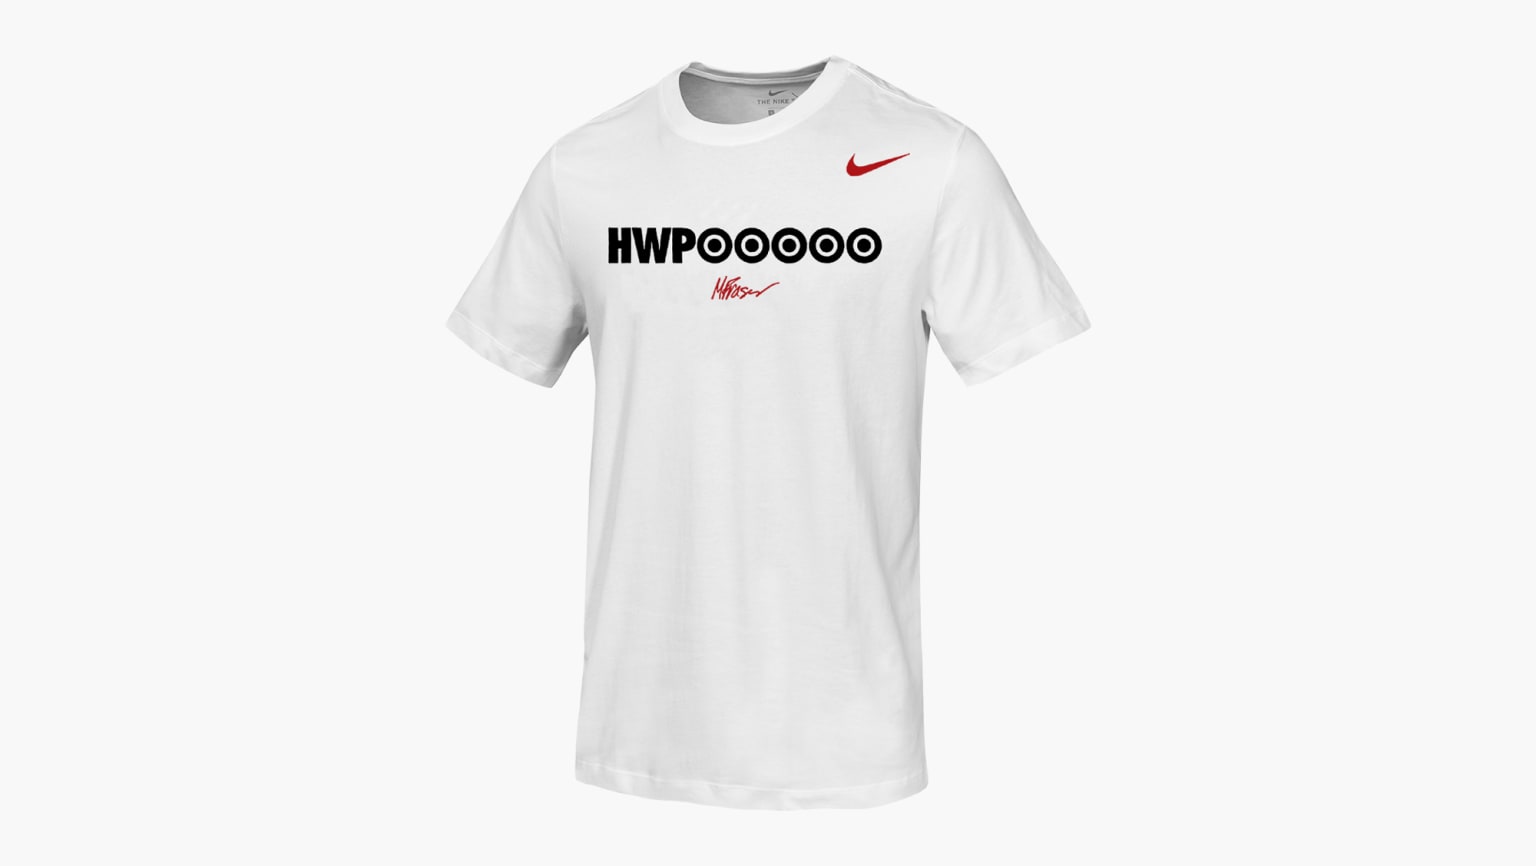 Nike Men's T-Shirt Logo Swoosh Printed Athletic Active Short Sleeve Shirt,  Blue, XL 